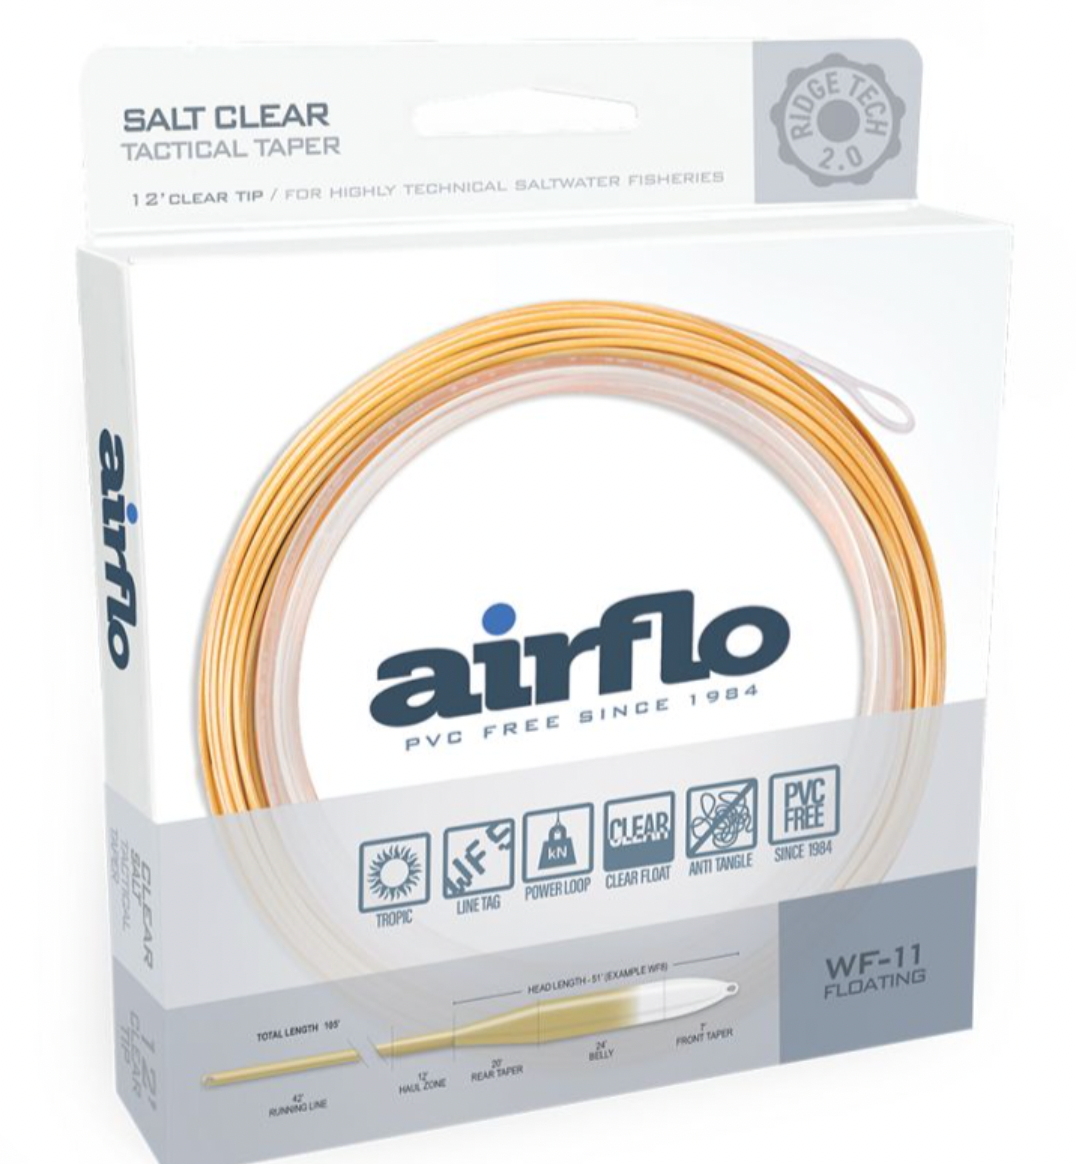 AIRFLO SUPERFLO RIDGE 2.0 FLATS TACTICAL TAPER 12FT CLEAR TIP